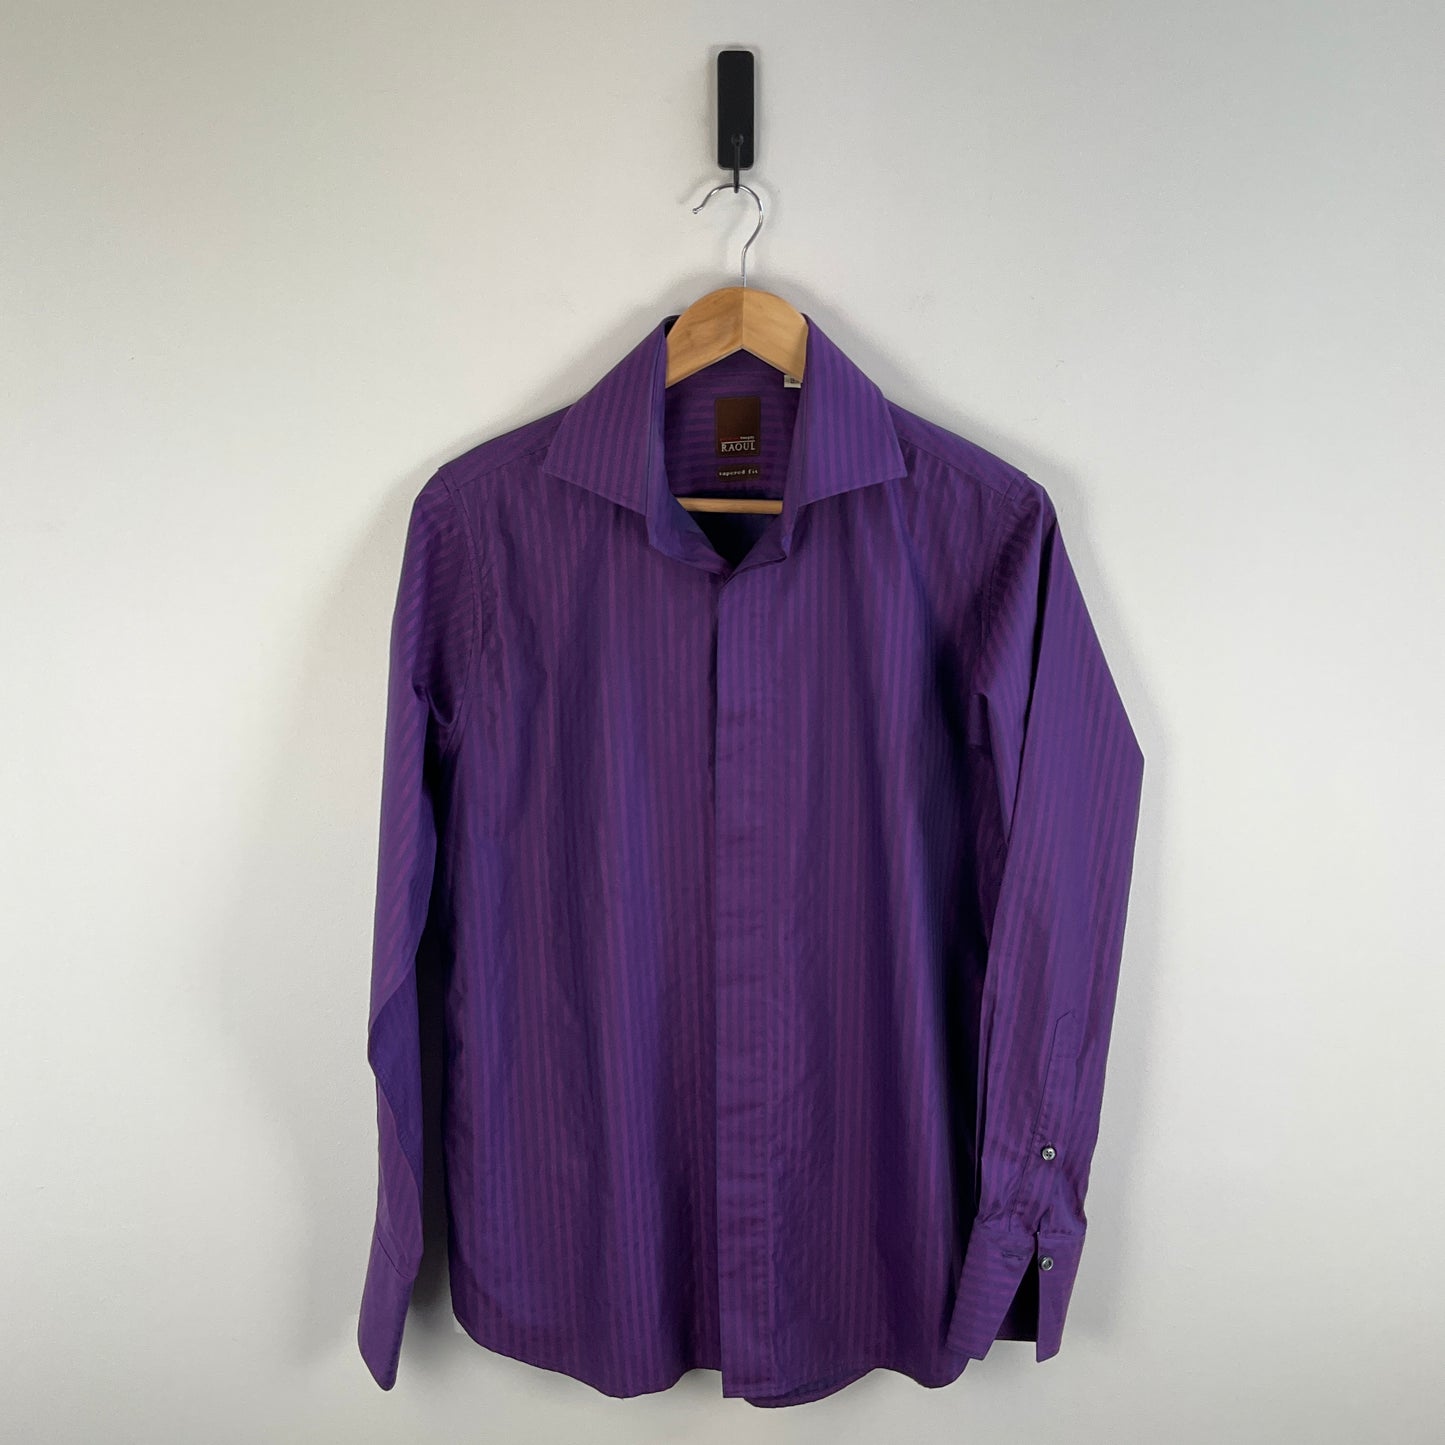 Raoul - Long Sleeve Shirt